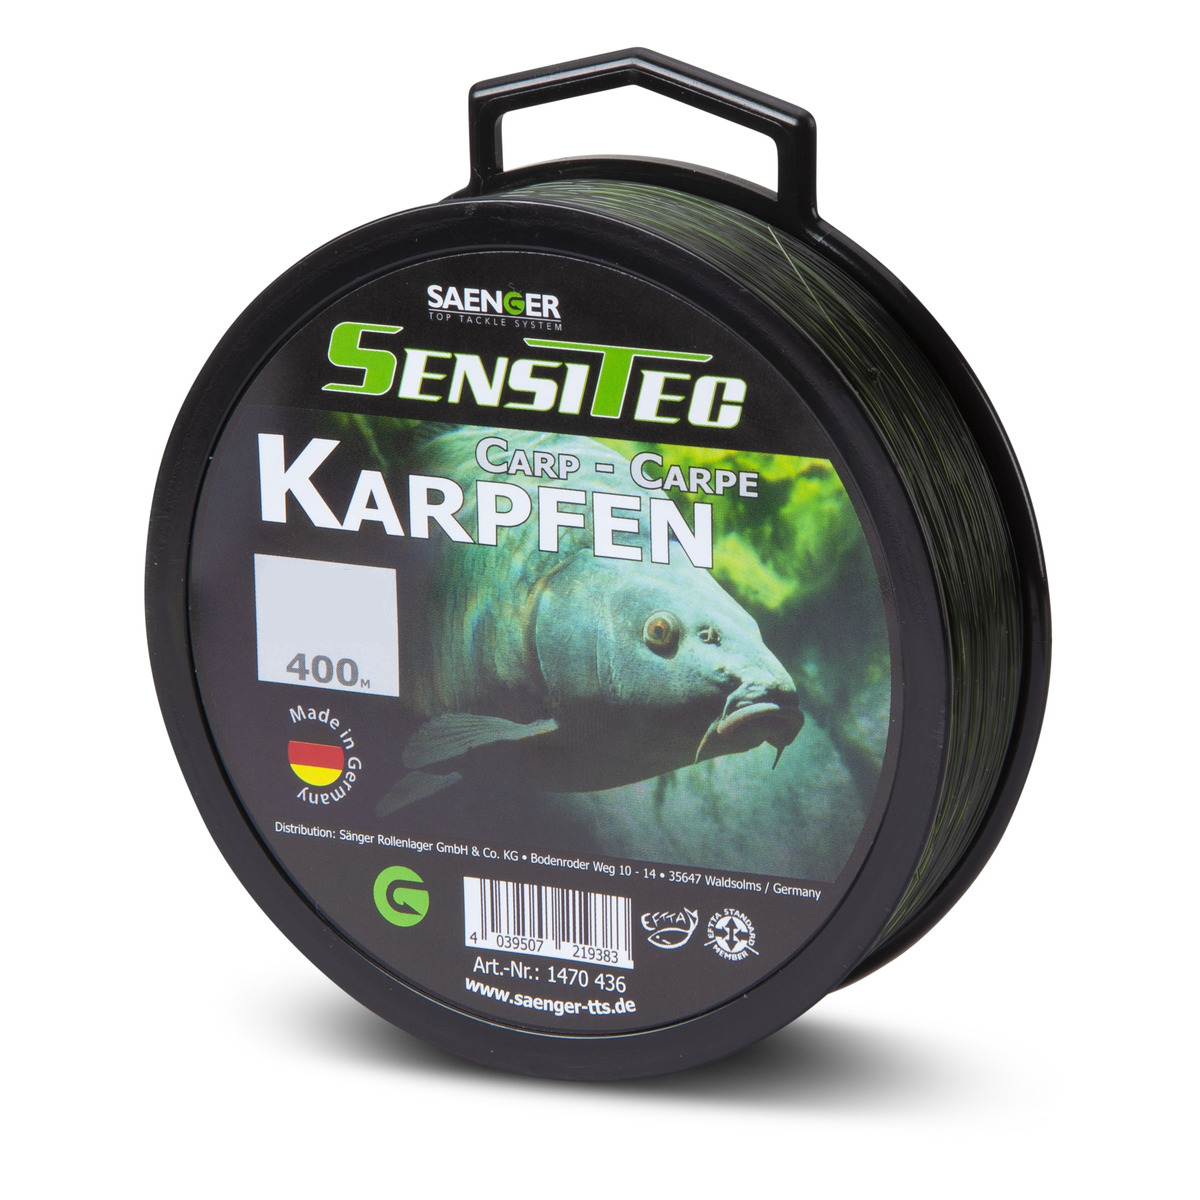 Sensitec Karpfen camou green 400 m - 0.28 mm